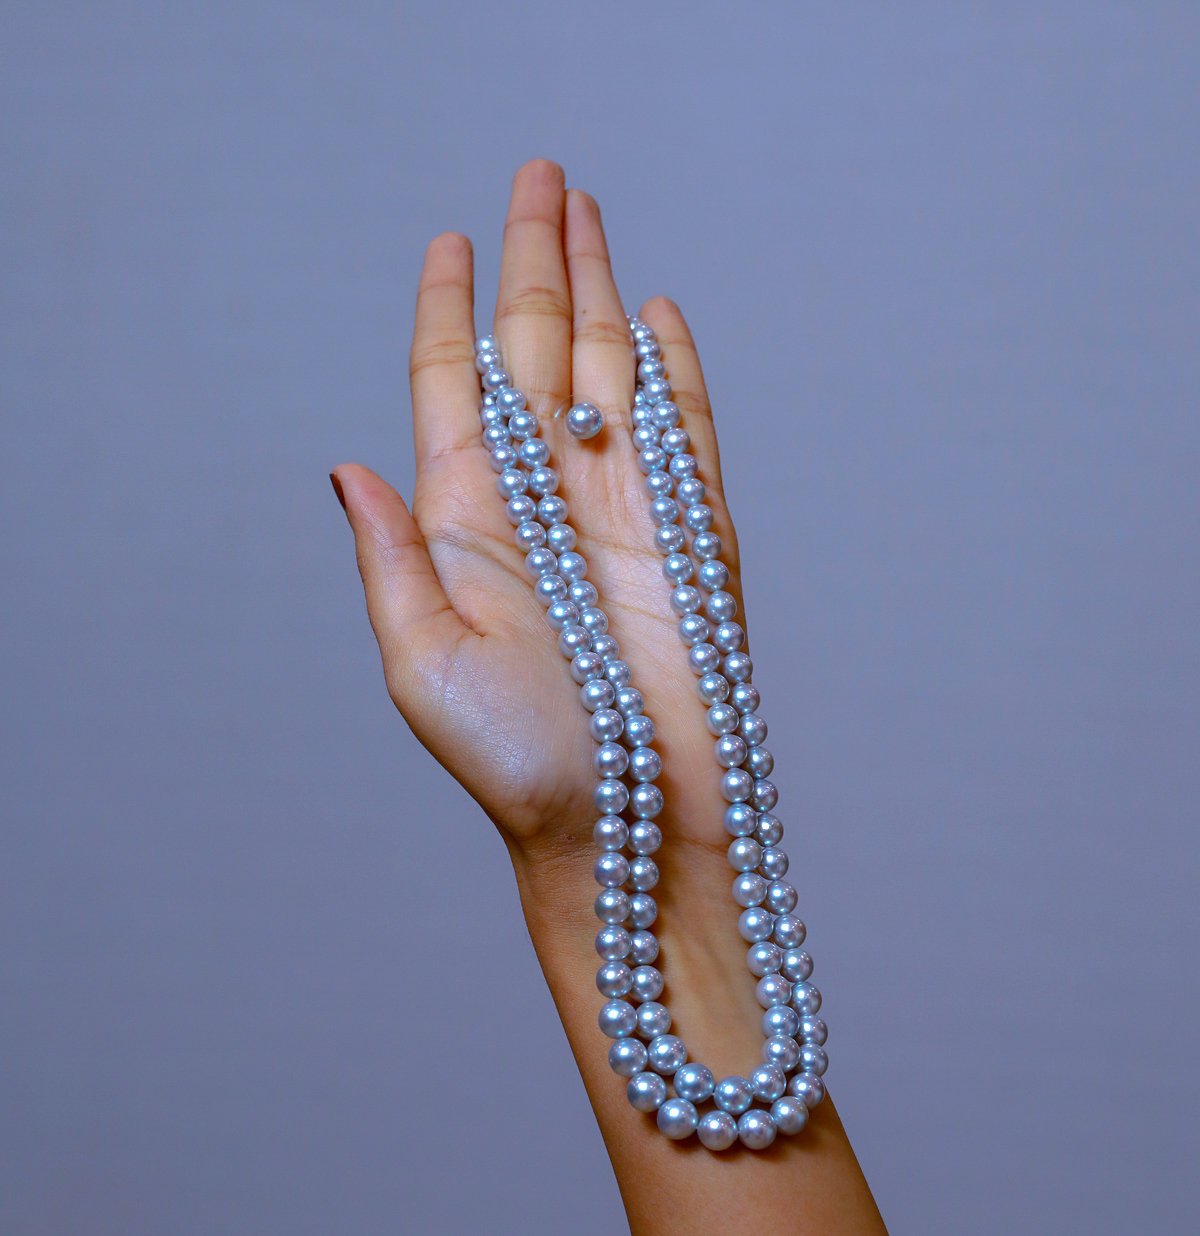 Grey Saltwater Akoya Pearls Necklace Set(Grading) Mangatrai Pearls & Jewellers